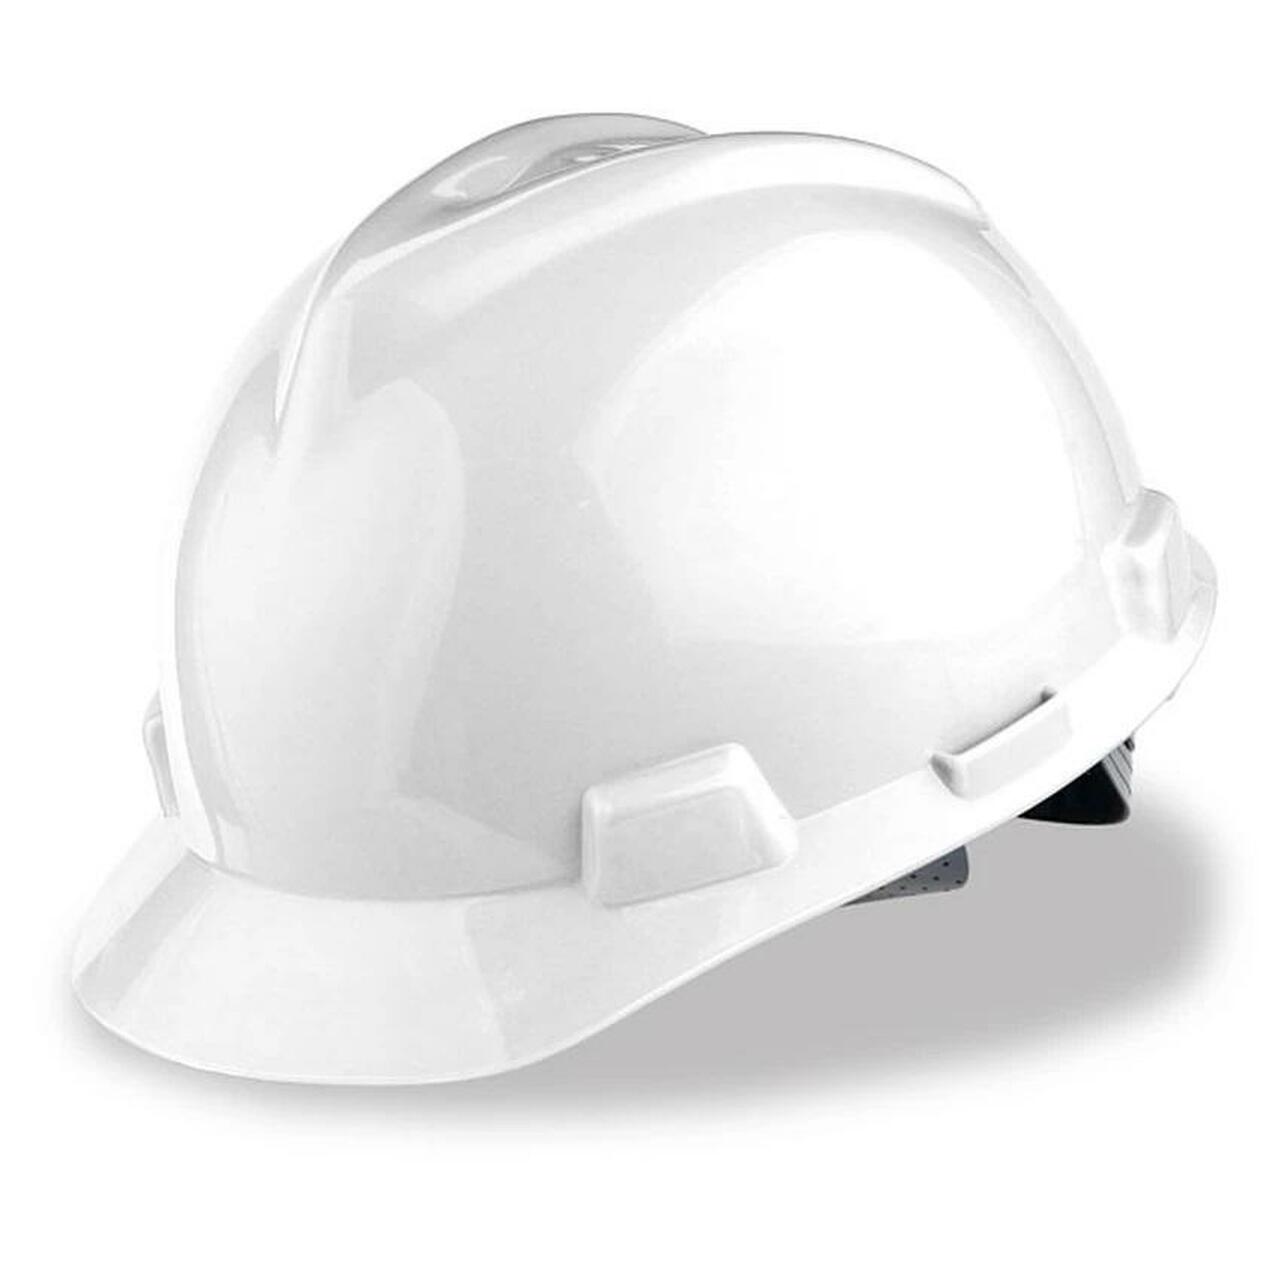 Total Safety Helmet | Supply Master | Accra, Ghana Tools Building Steel Engineering Hardware tool